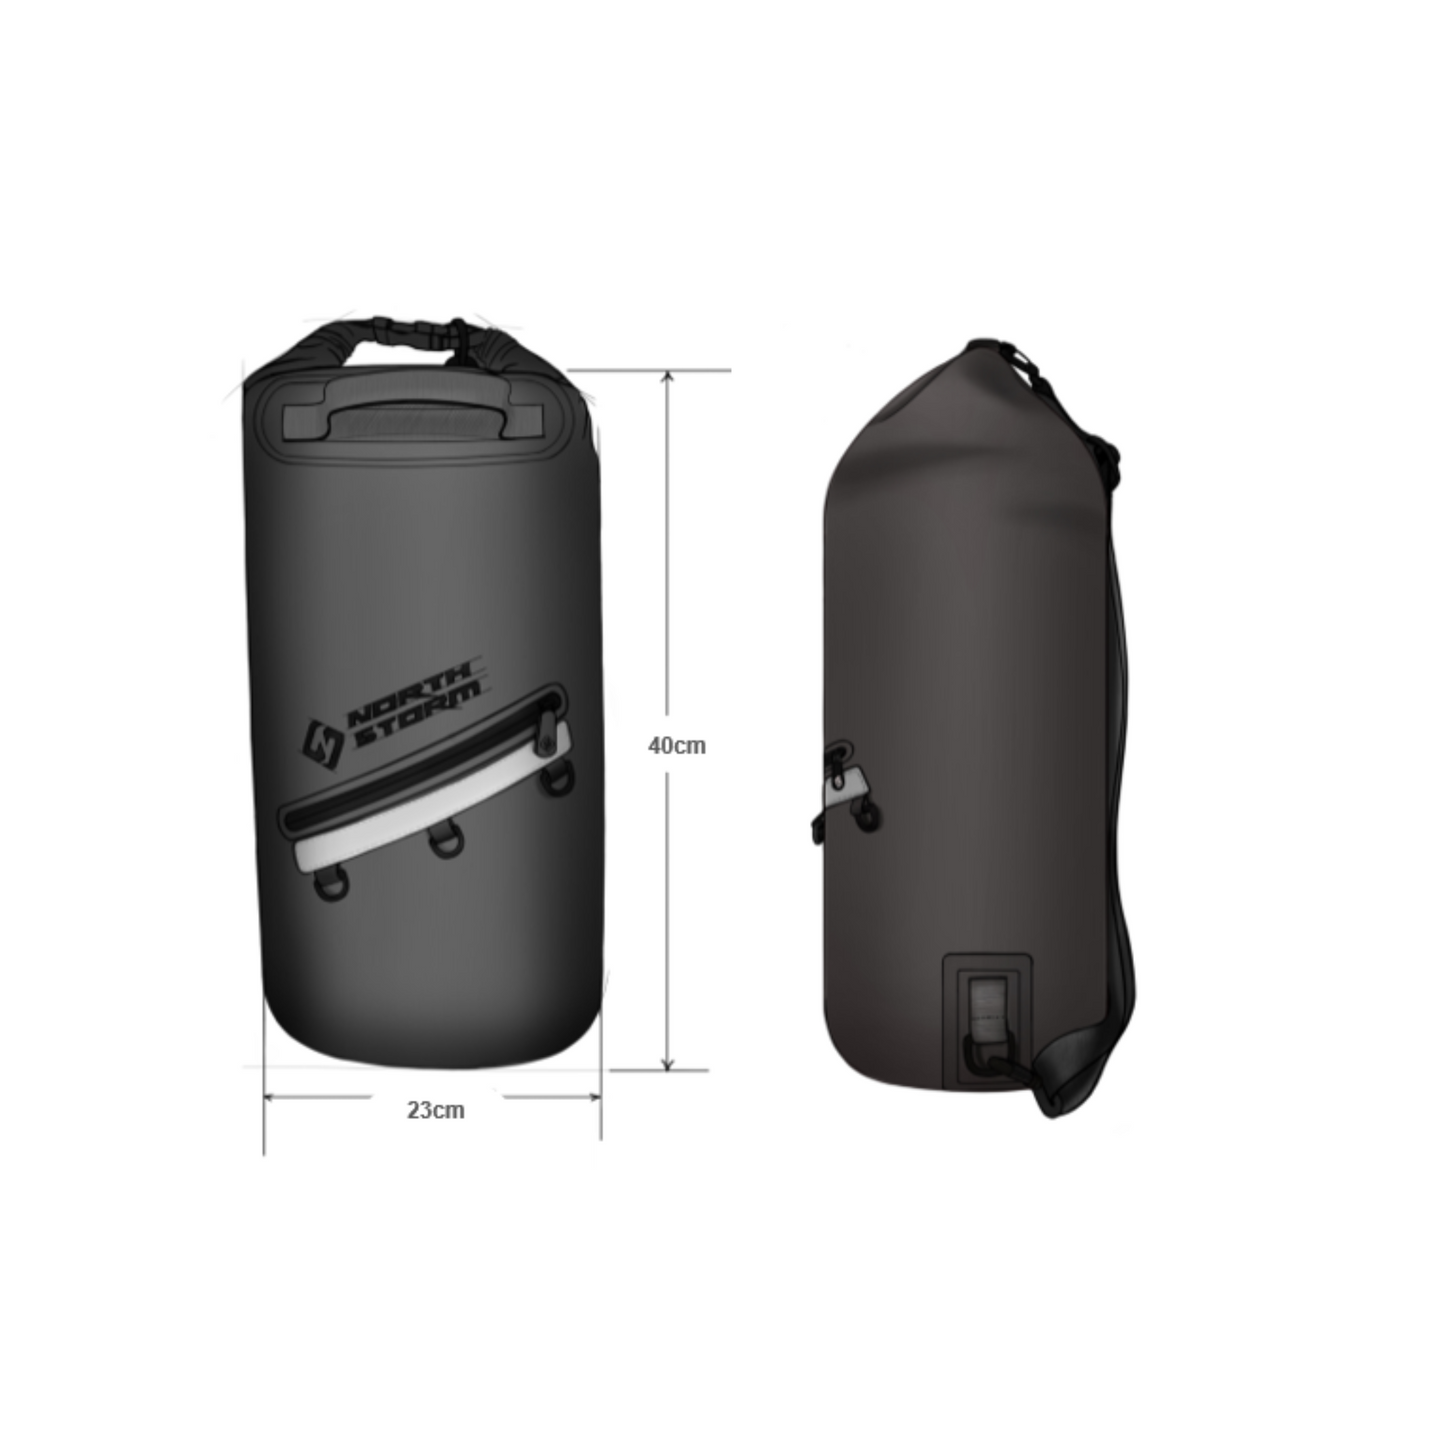 Waterproof Bag Bundle Deal{- Premium Waterproof Bag from North Storm® - Just $279.95! Shop now at North Storm®